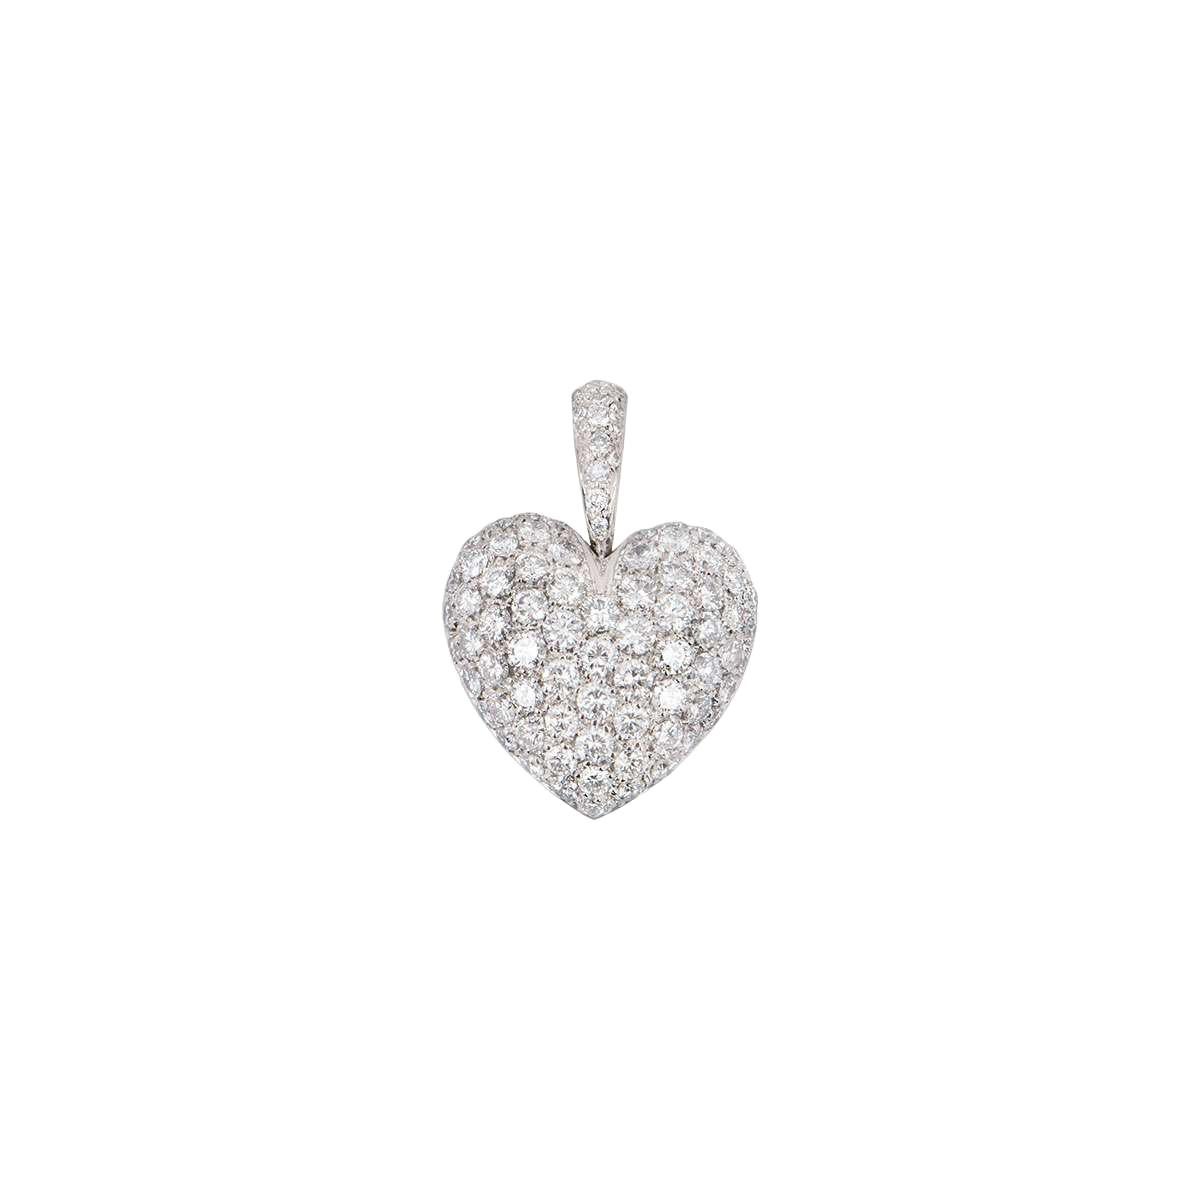 18 Karat White Gold Diamond Heart Pendant 1.97 Carat